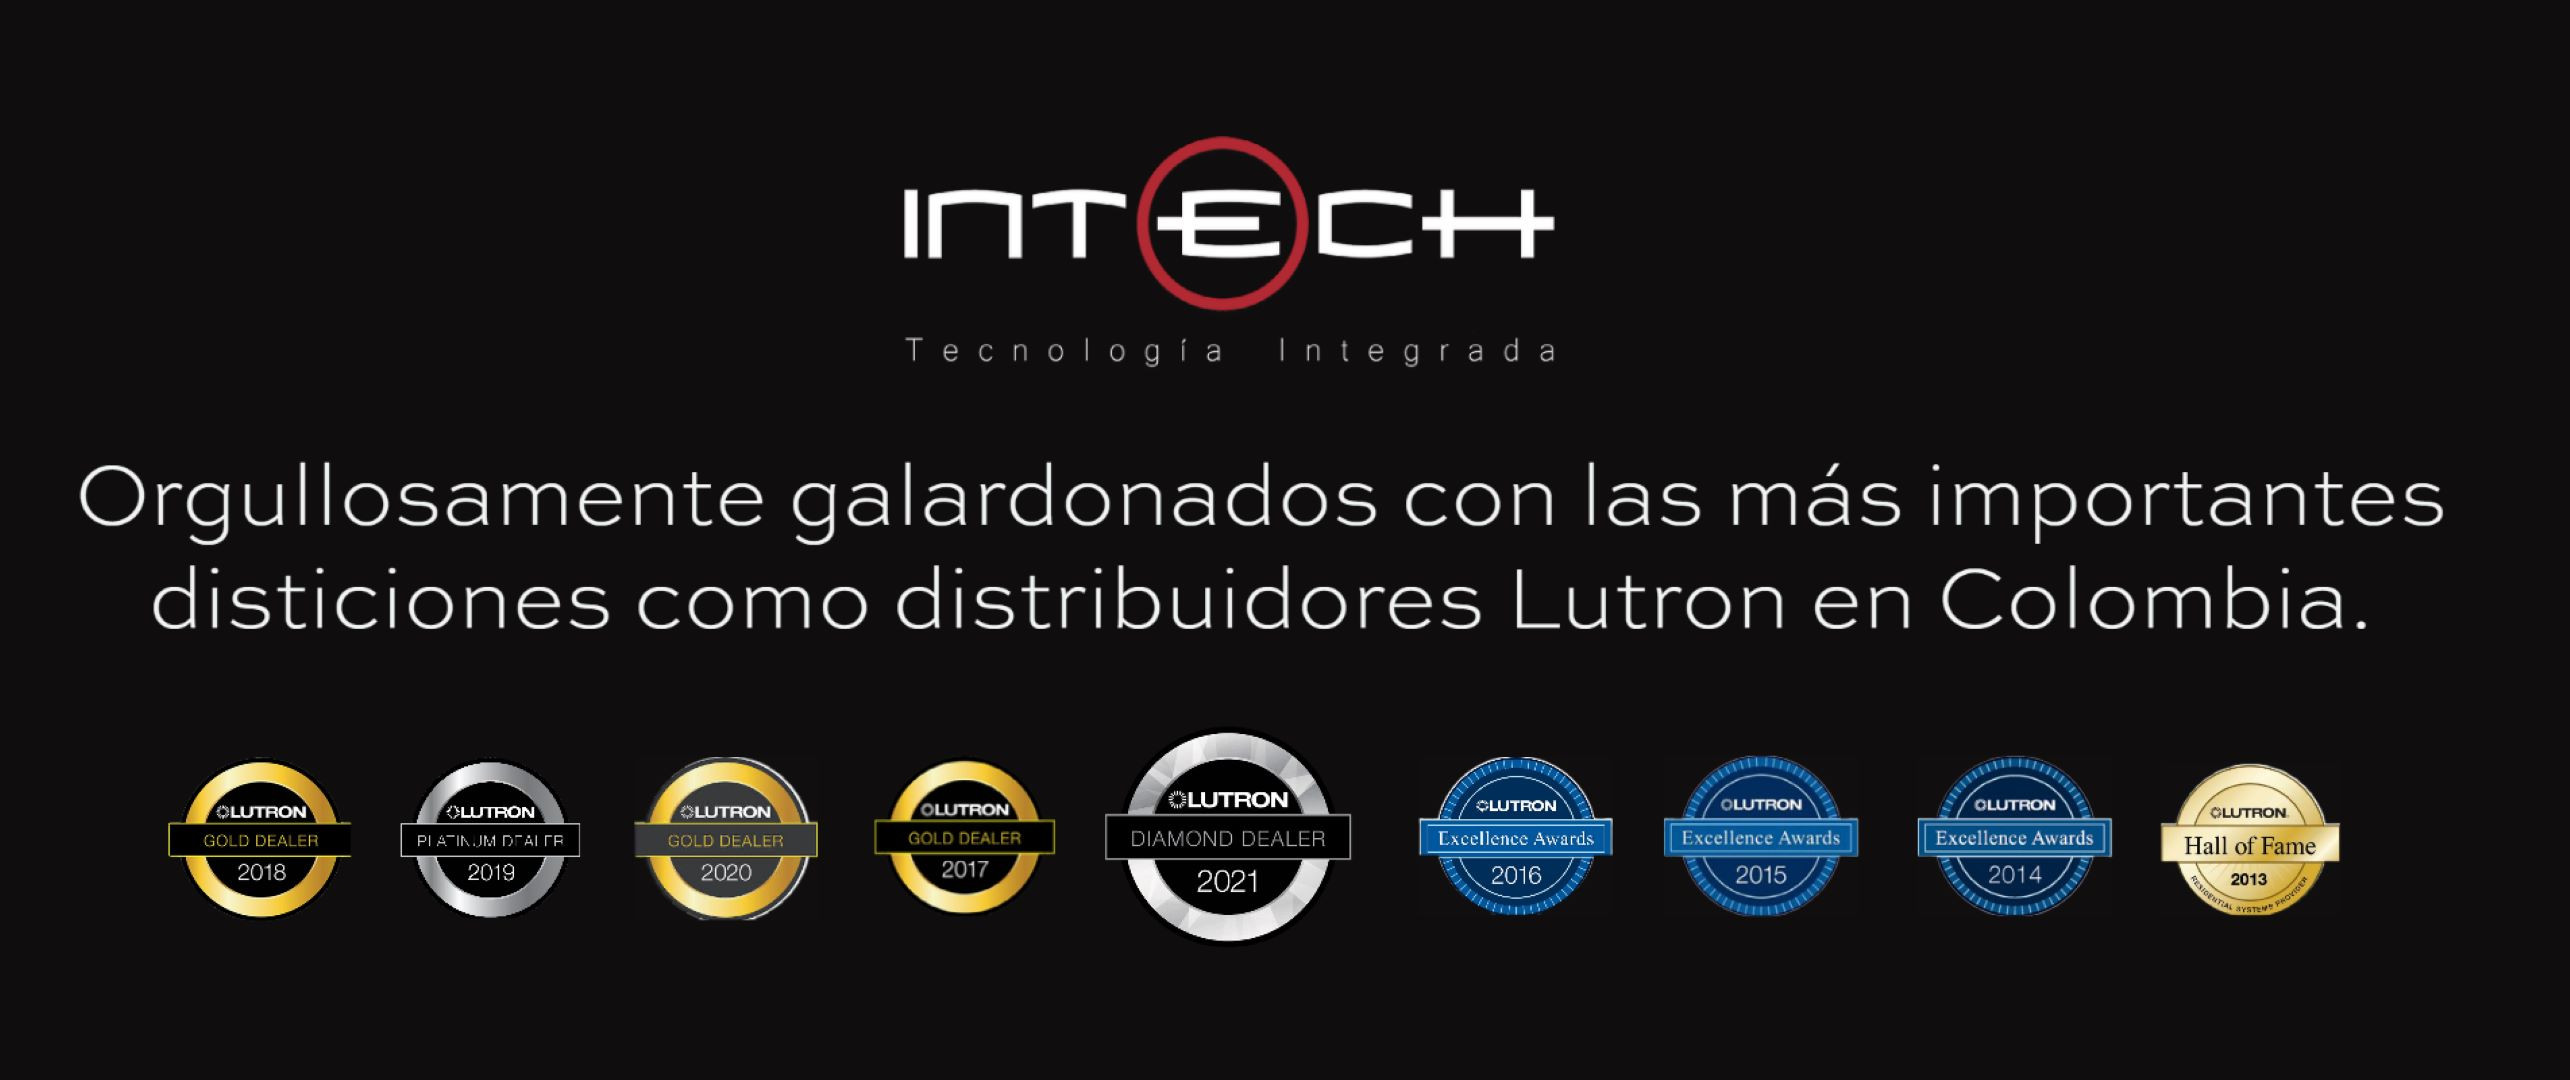 Intech Distribuidor Lutron Colombia & Miami Florida